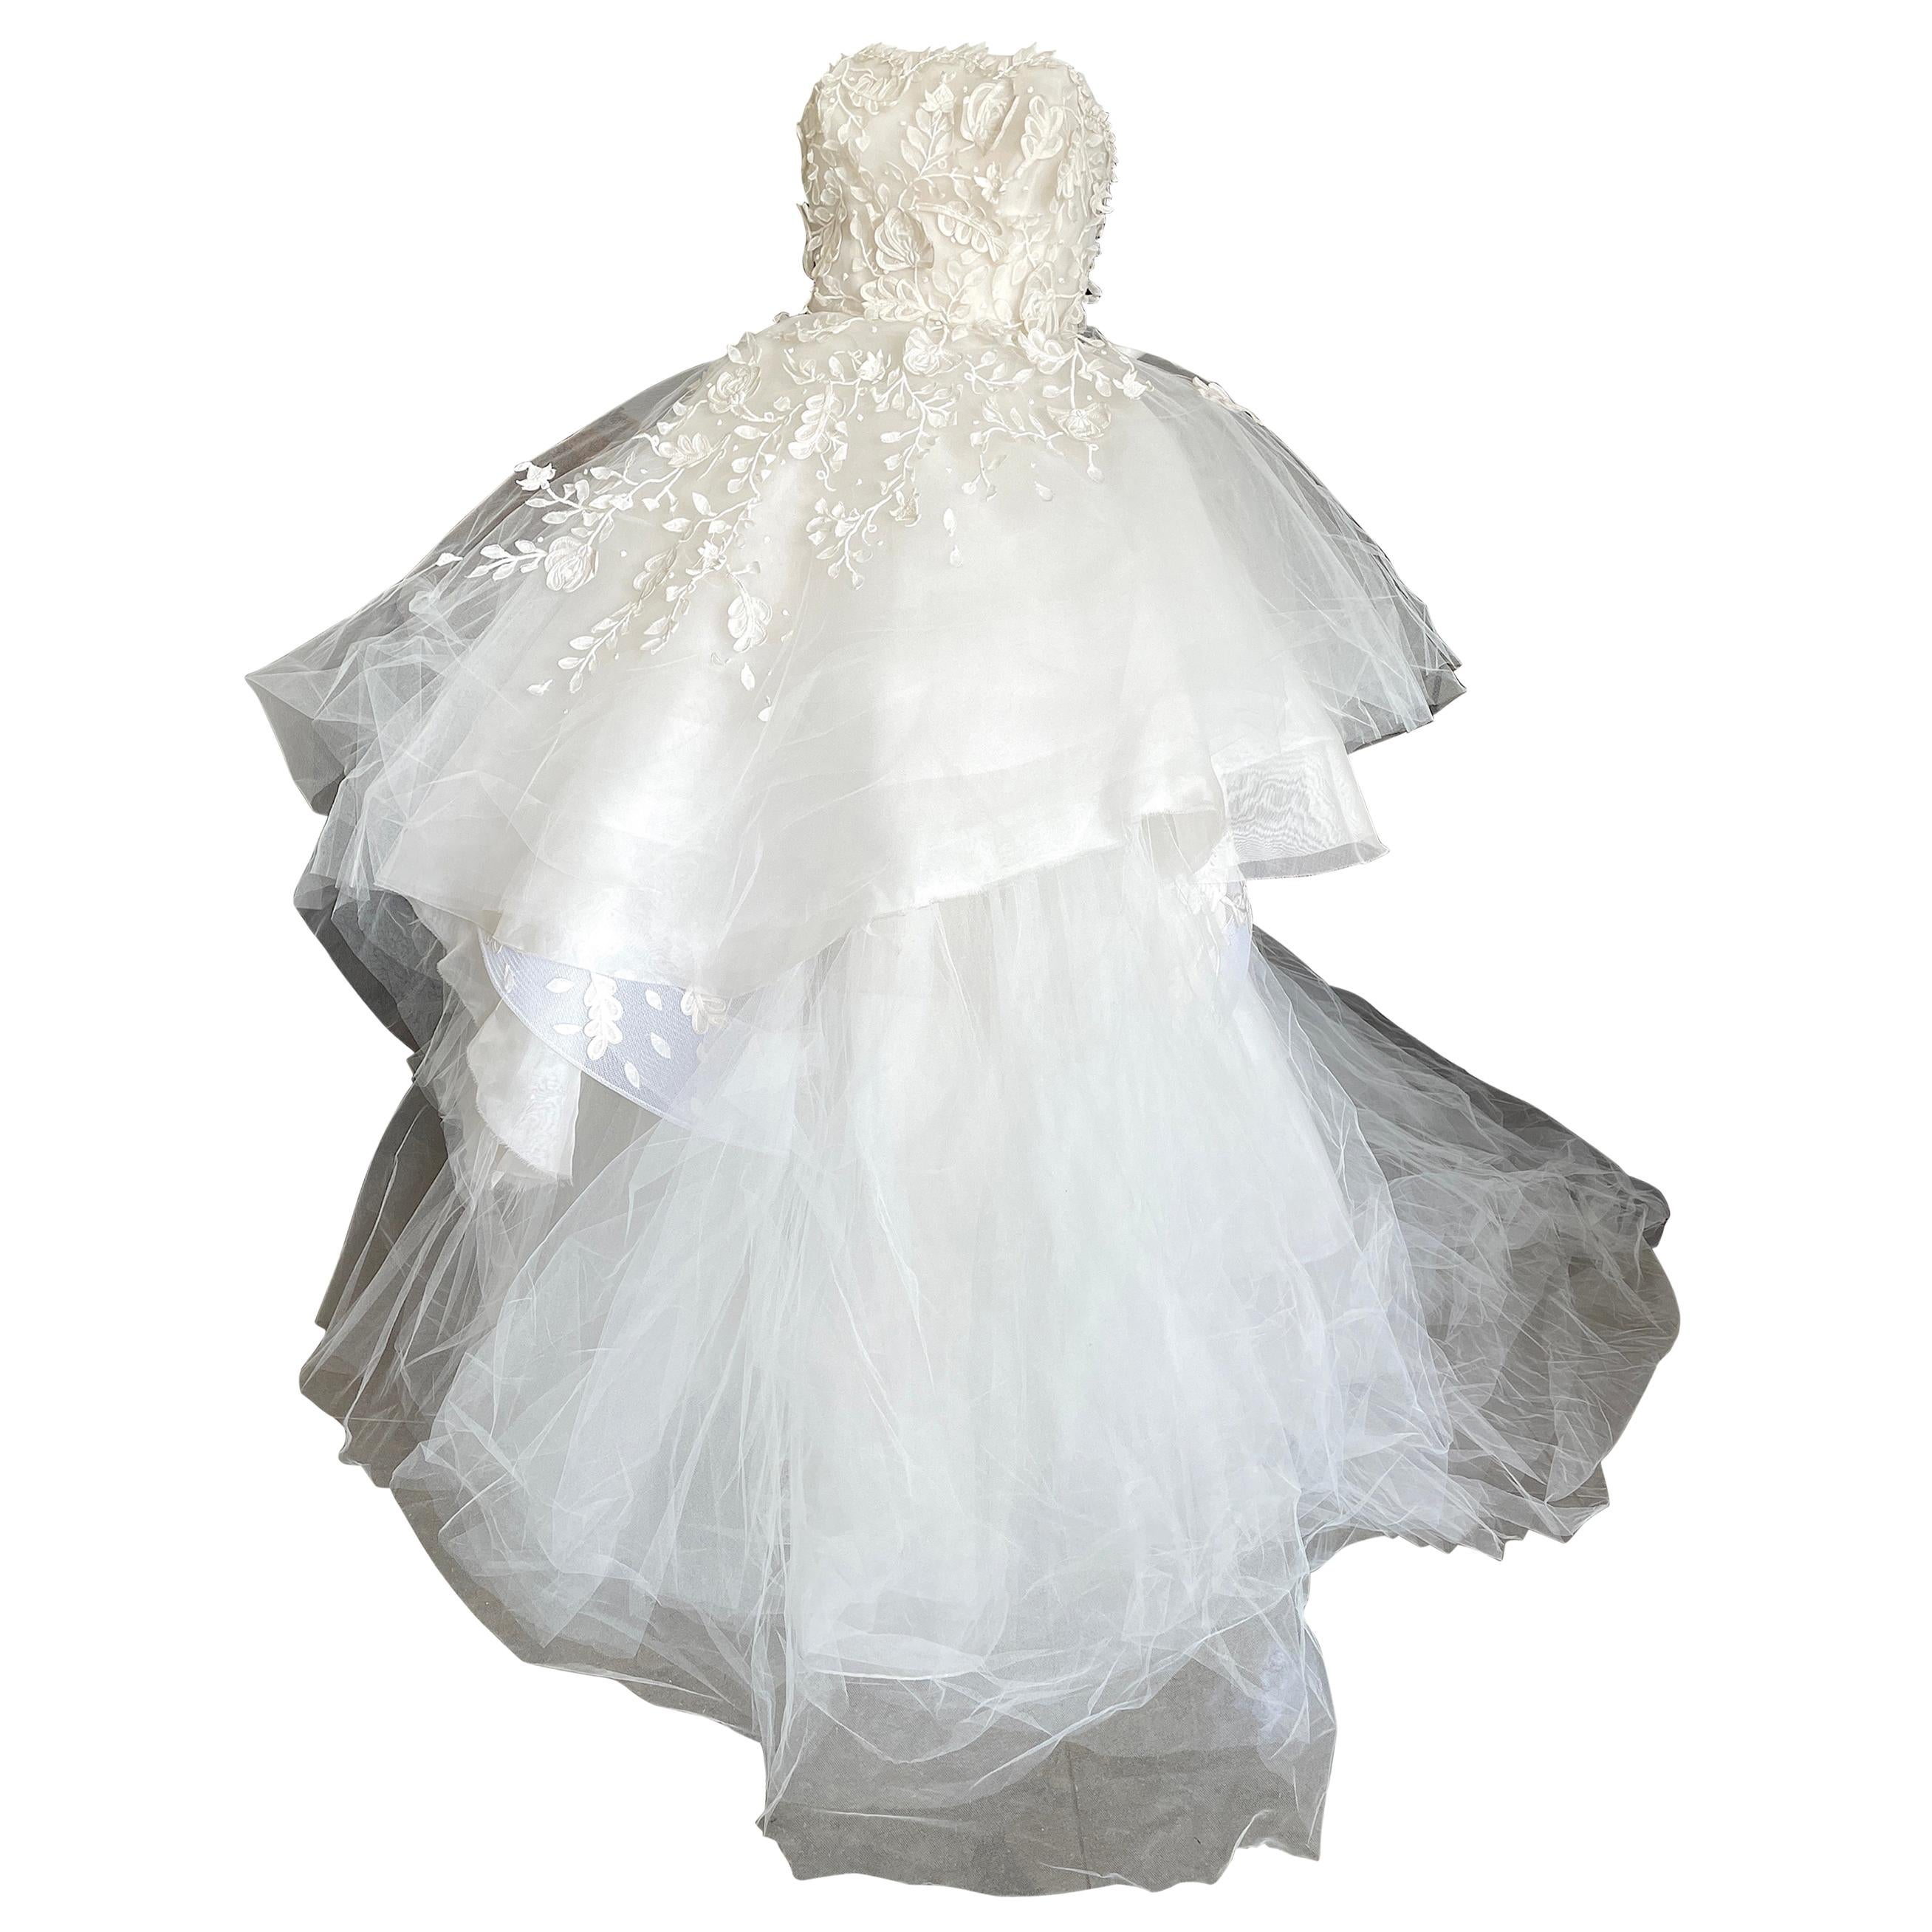 Oscar de la Renta Vintage Wedding Dress with Floral Applique For Sale